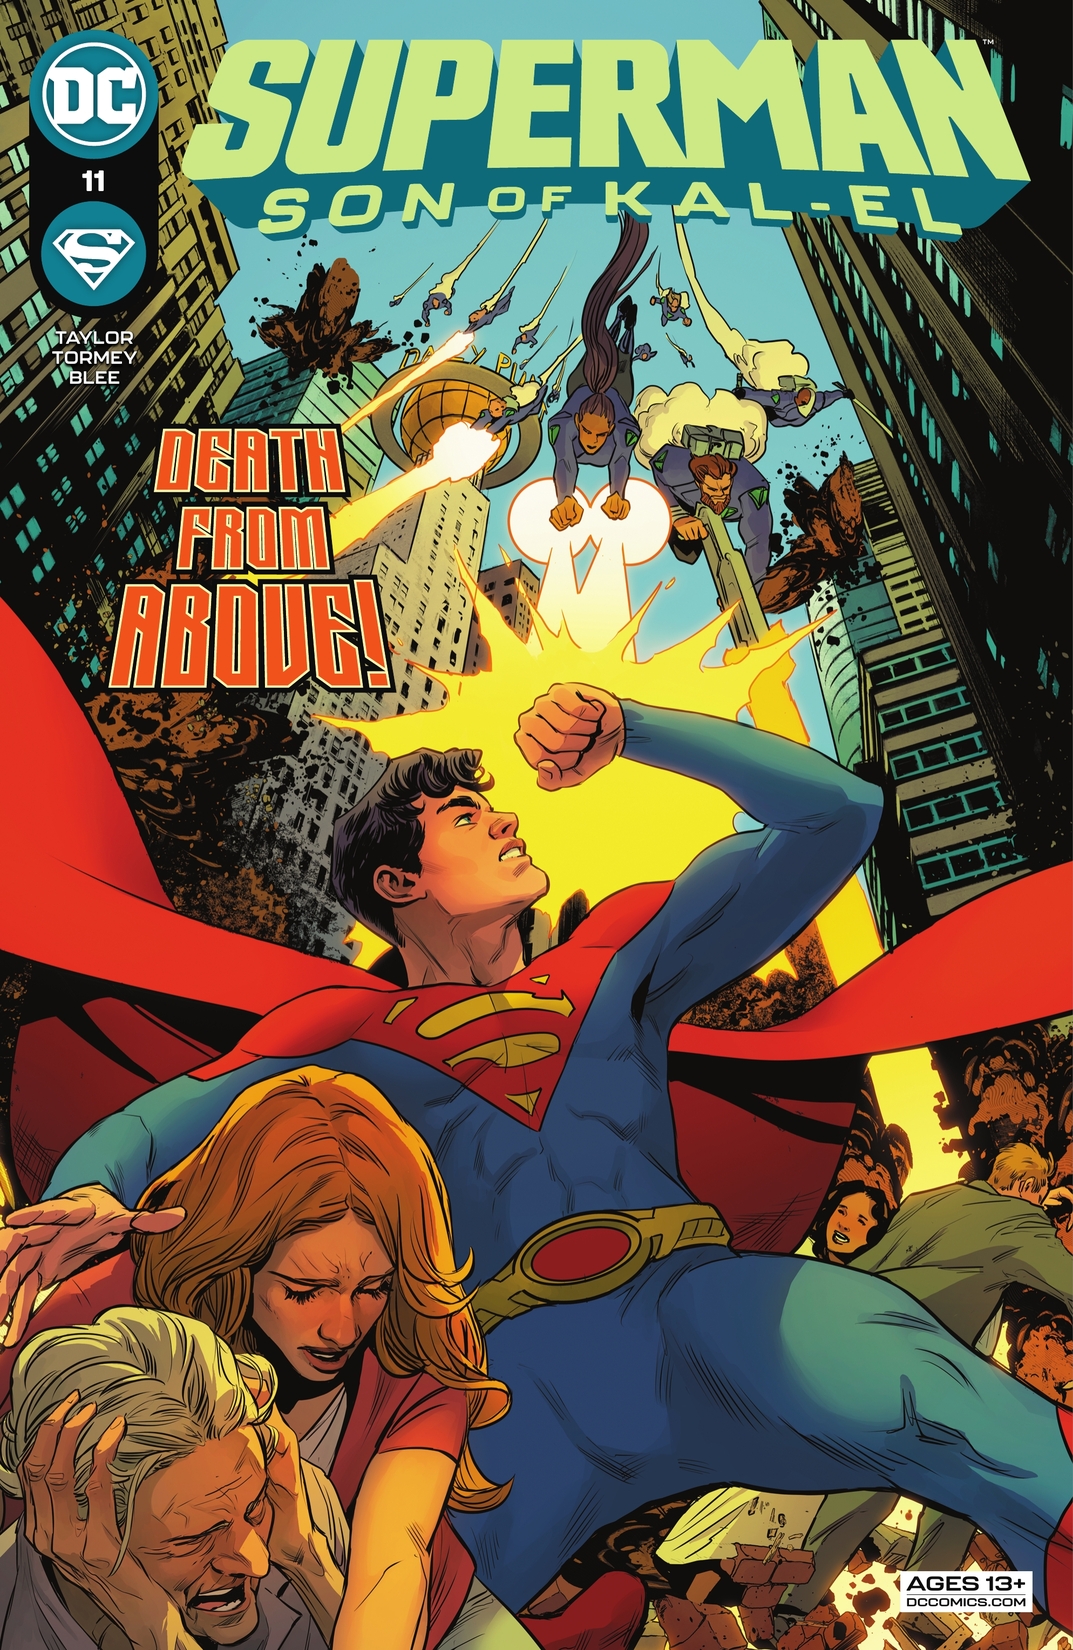 Superman: Son of Kal-El #11 preview images